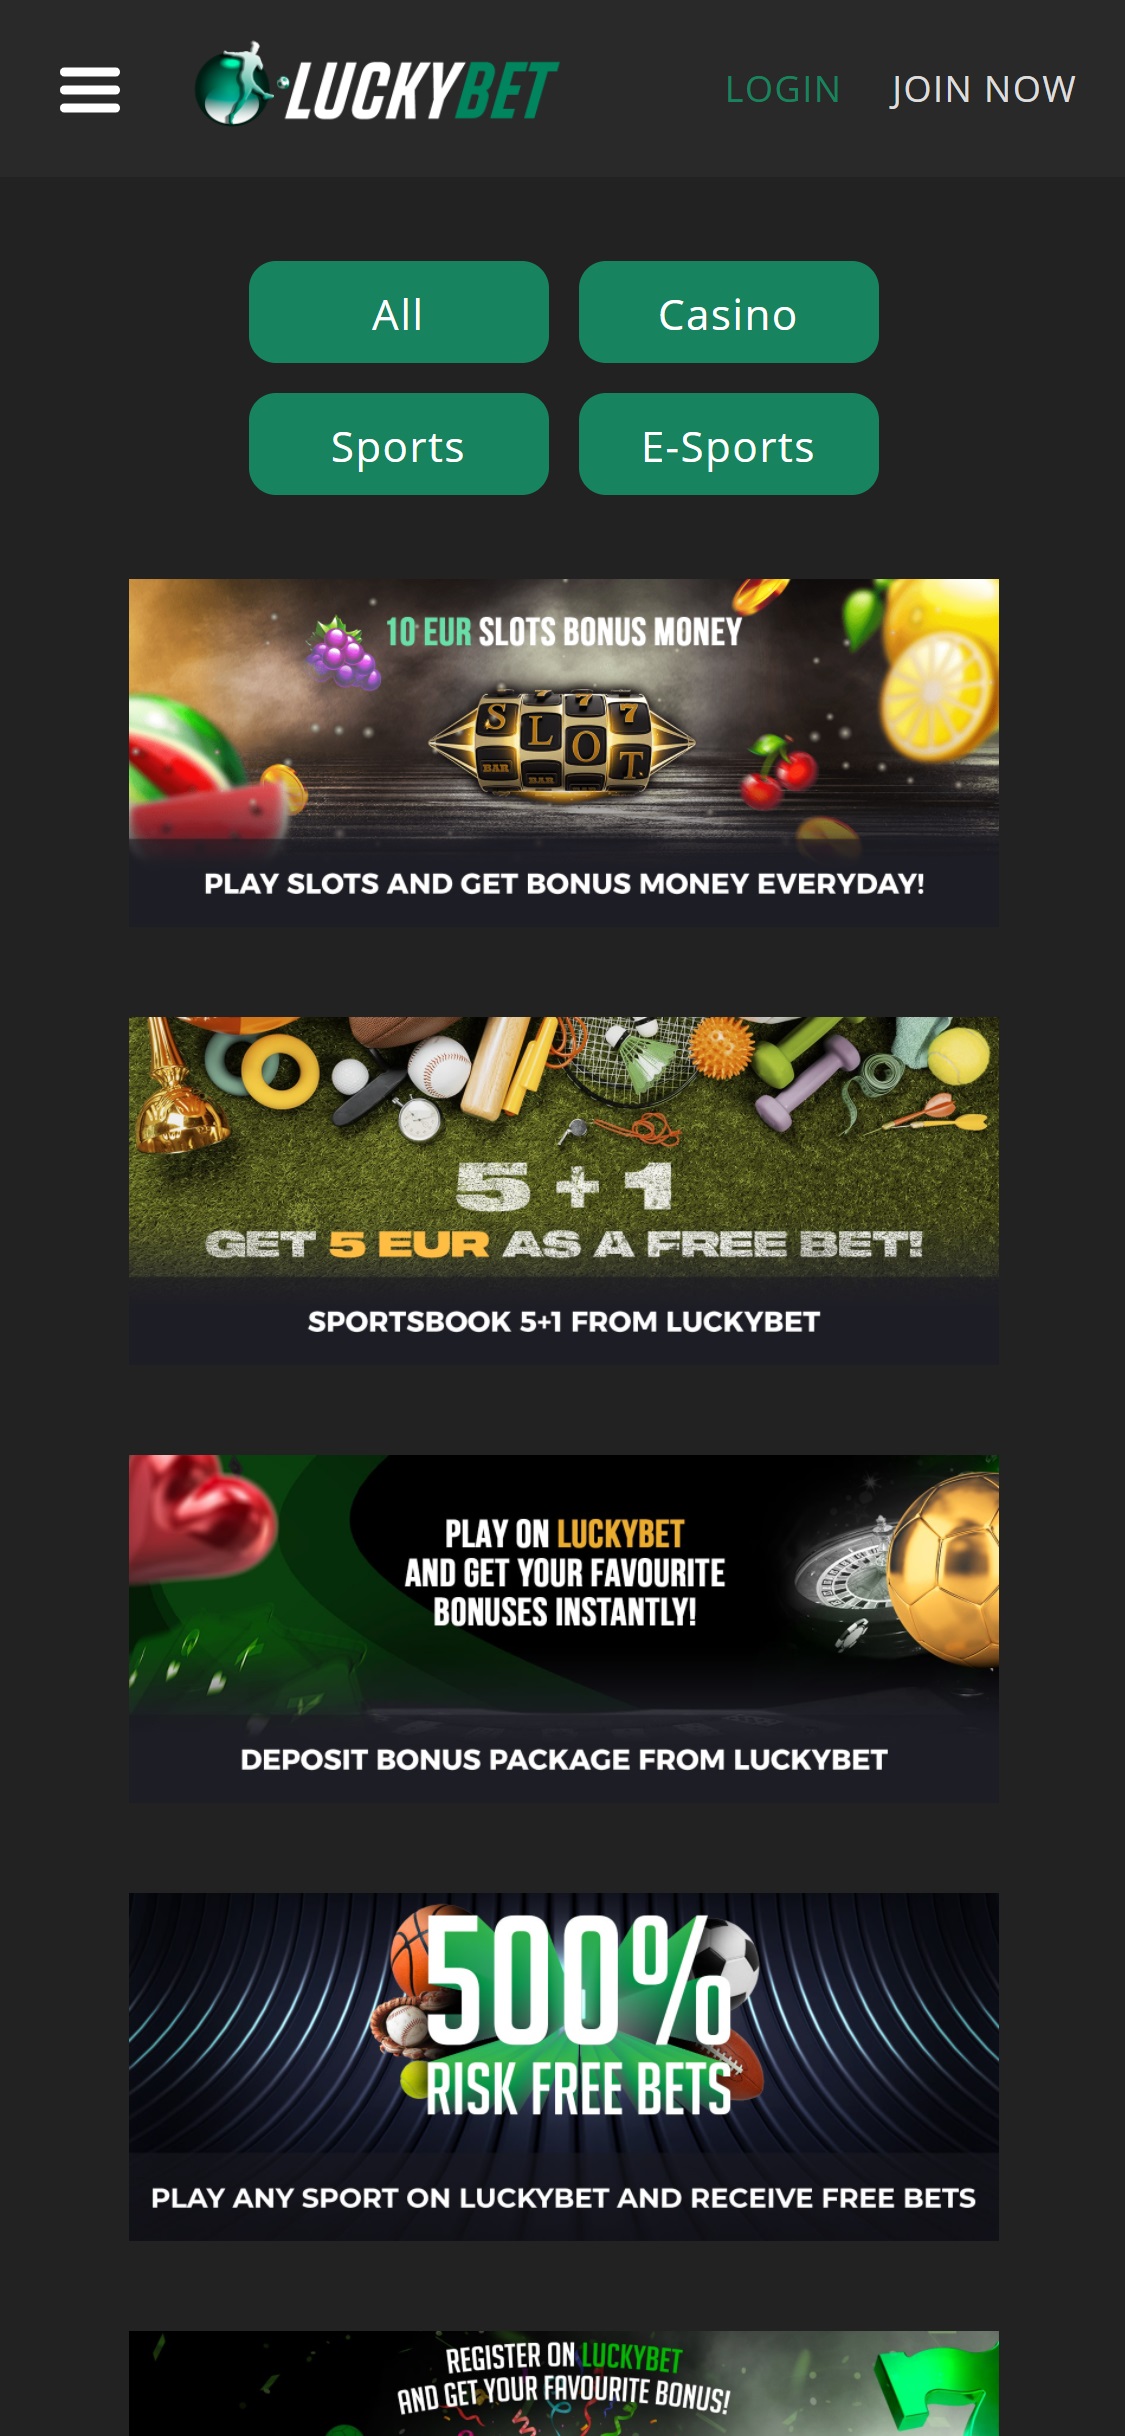 Lucky Bet Mobile No Deposit Bonus Review